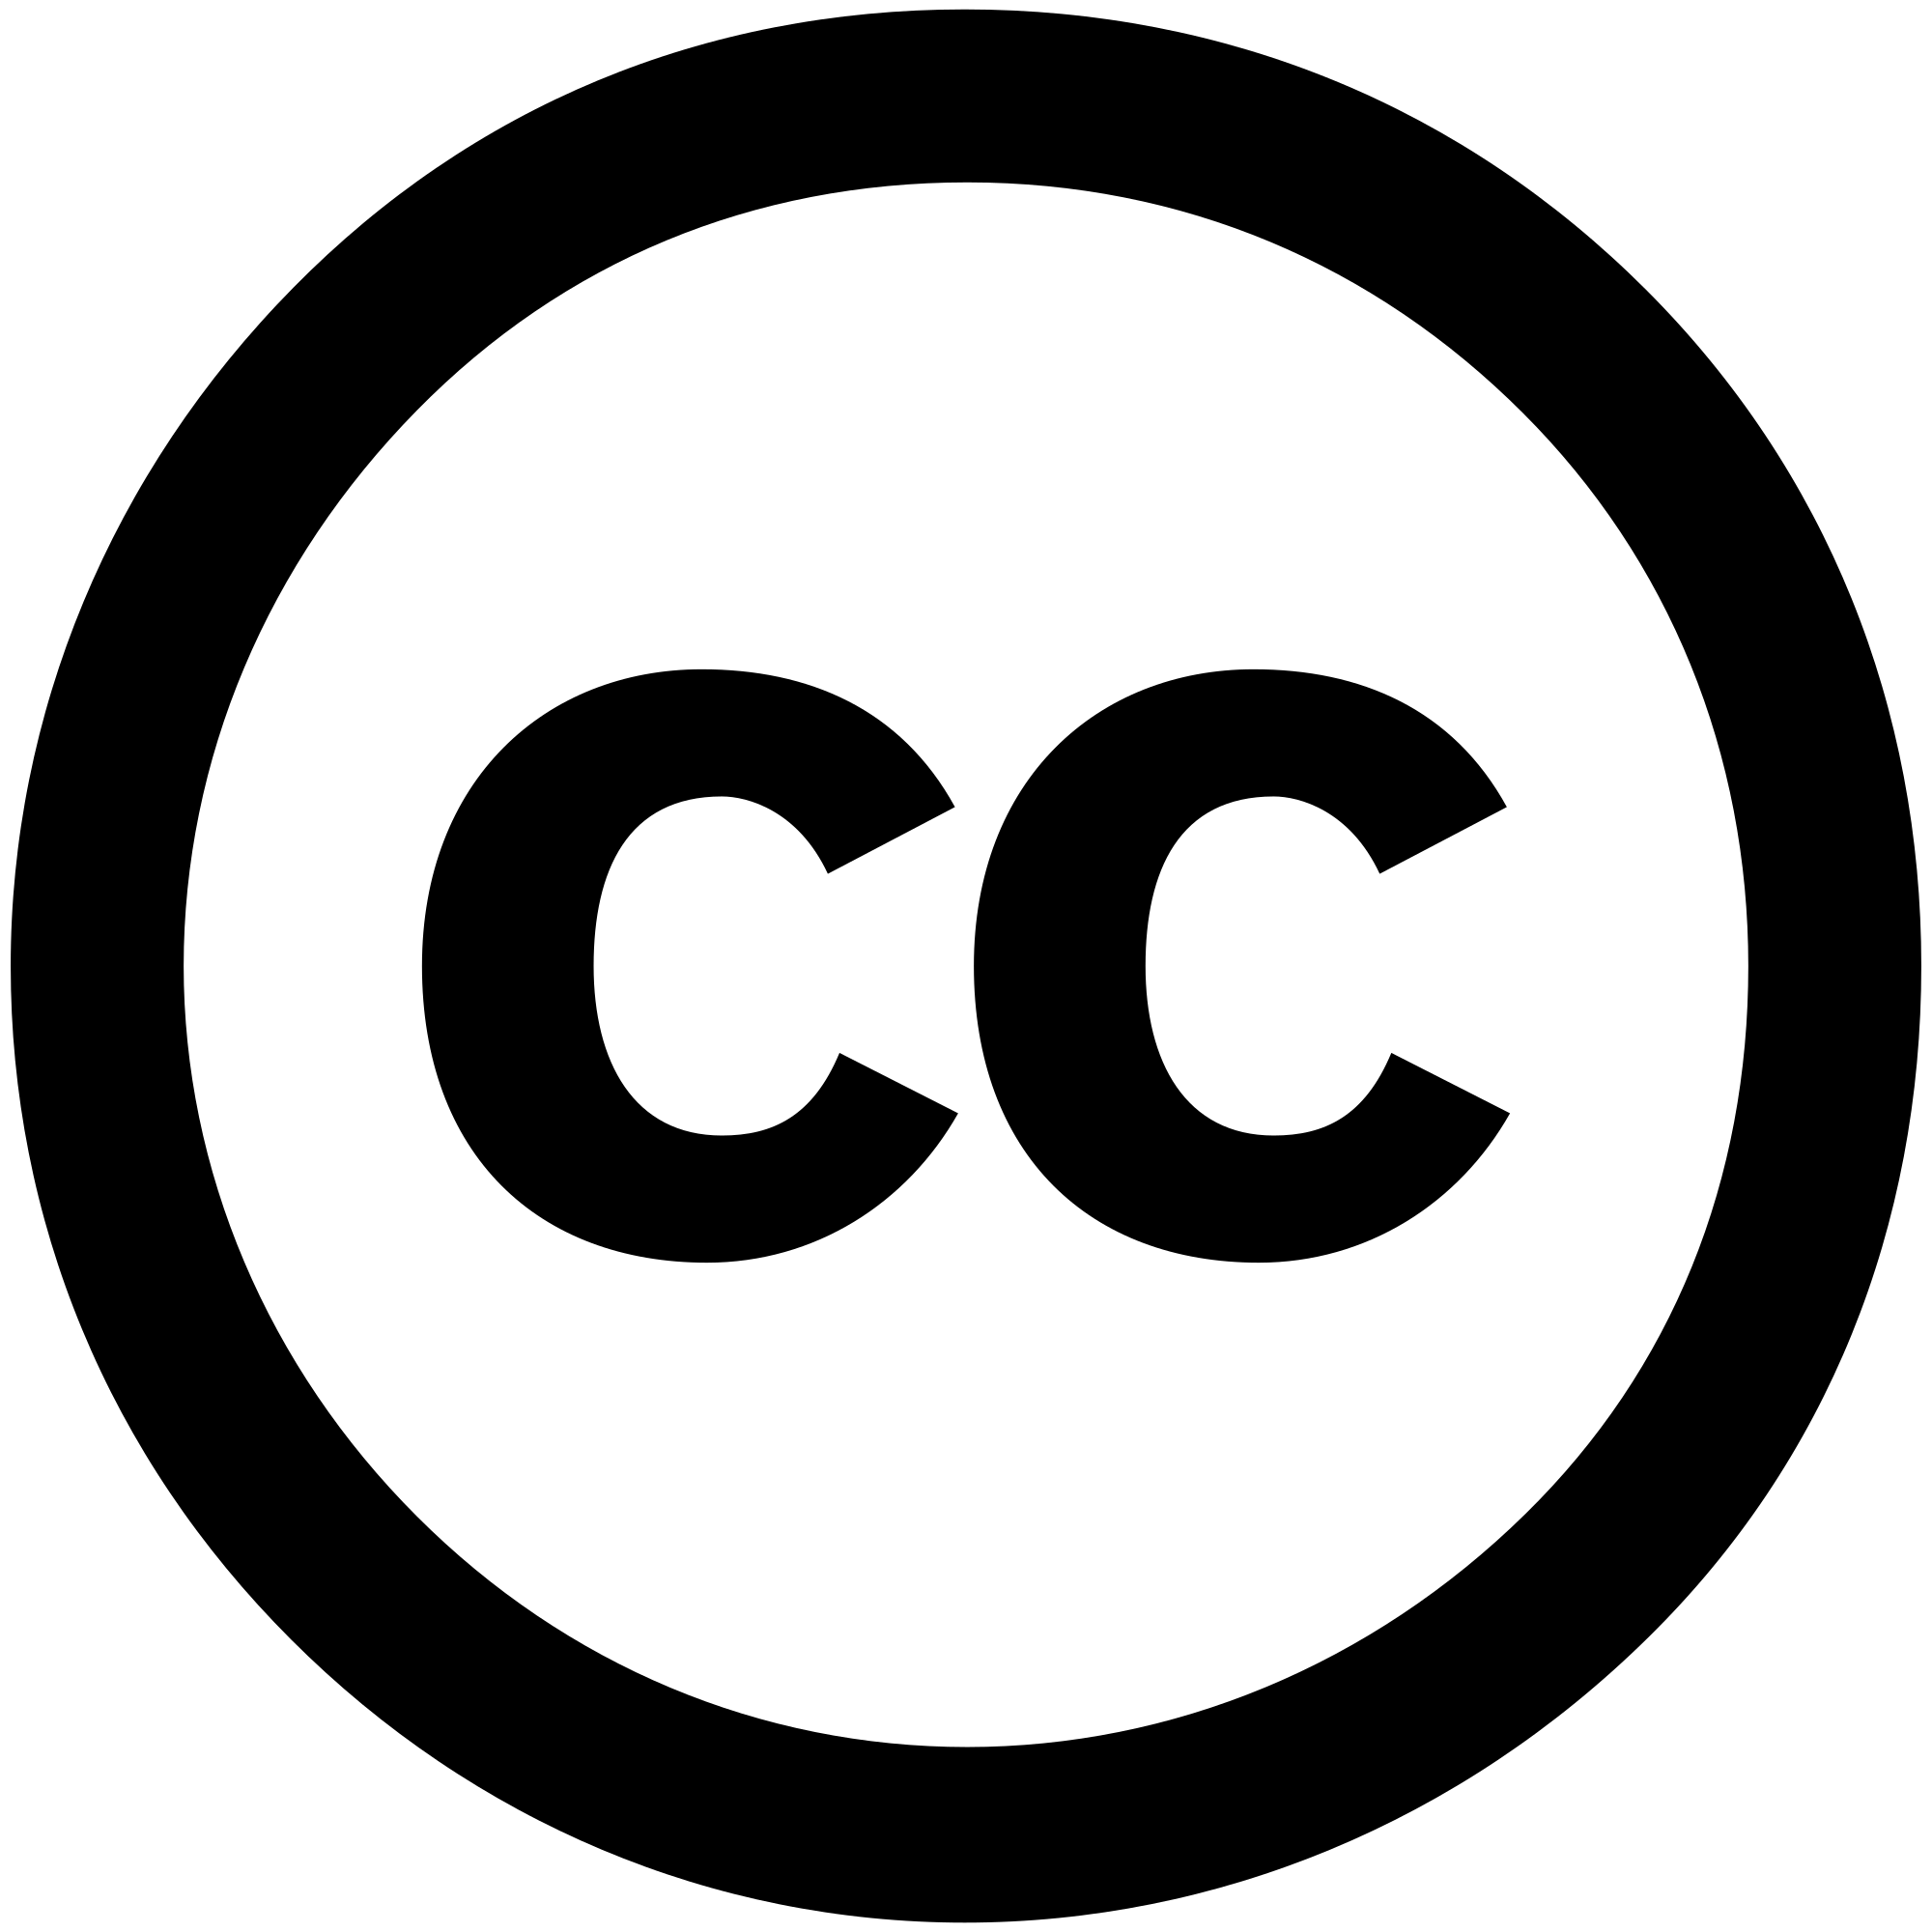 Creative Commons Logo - Creative Commons license